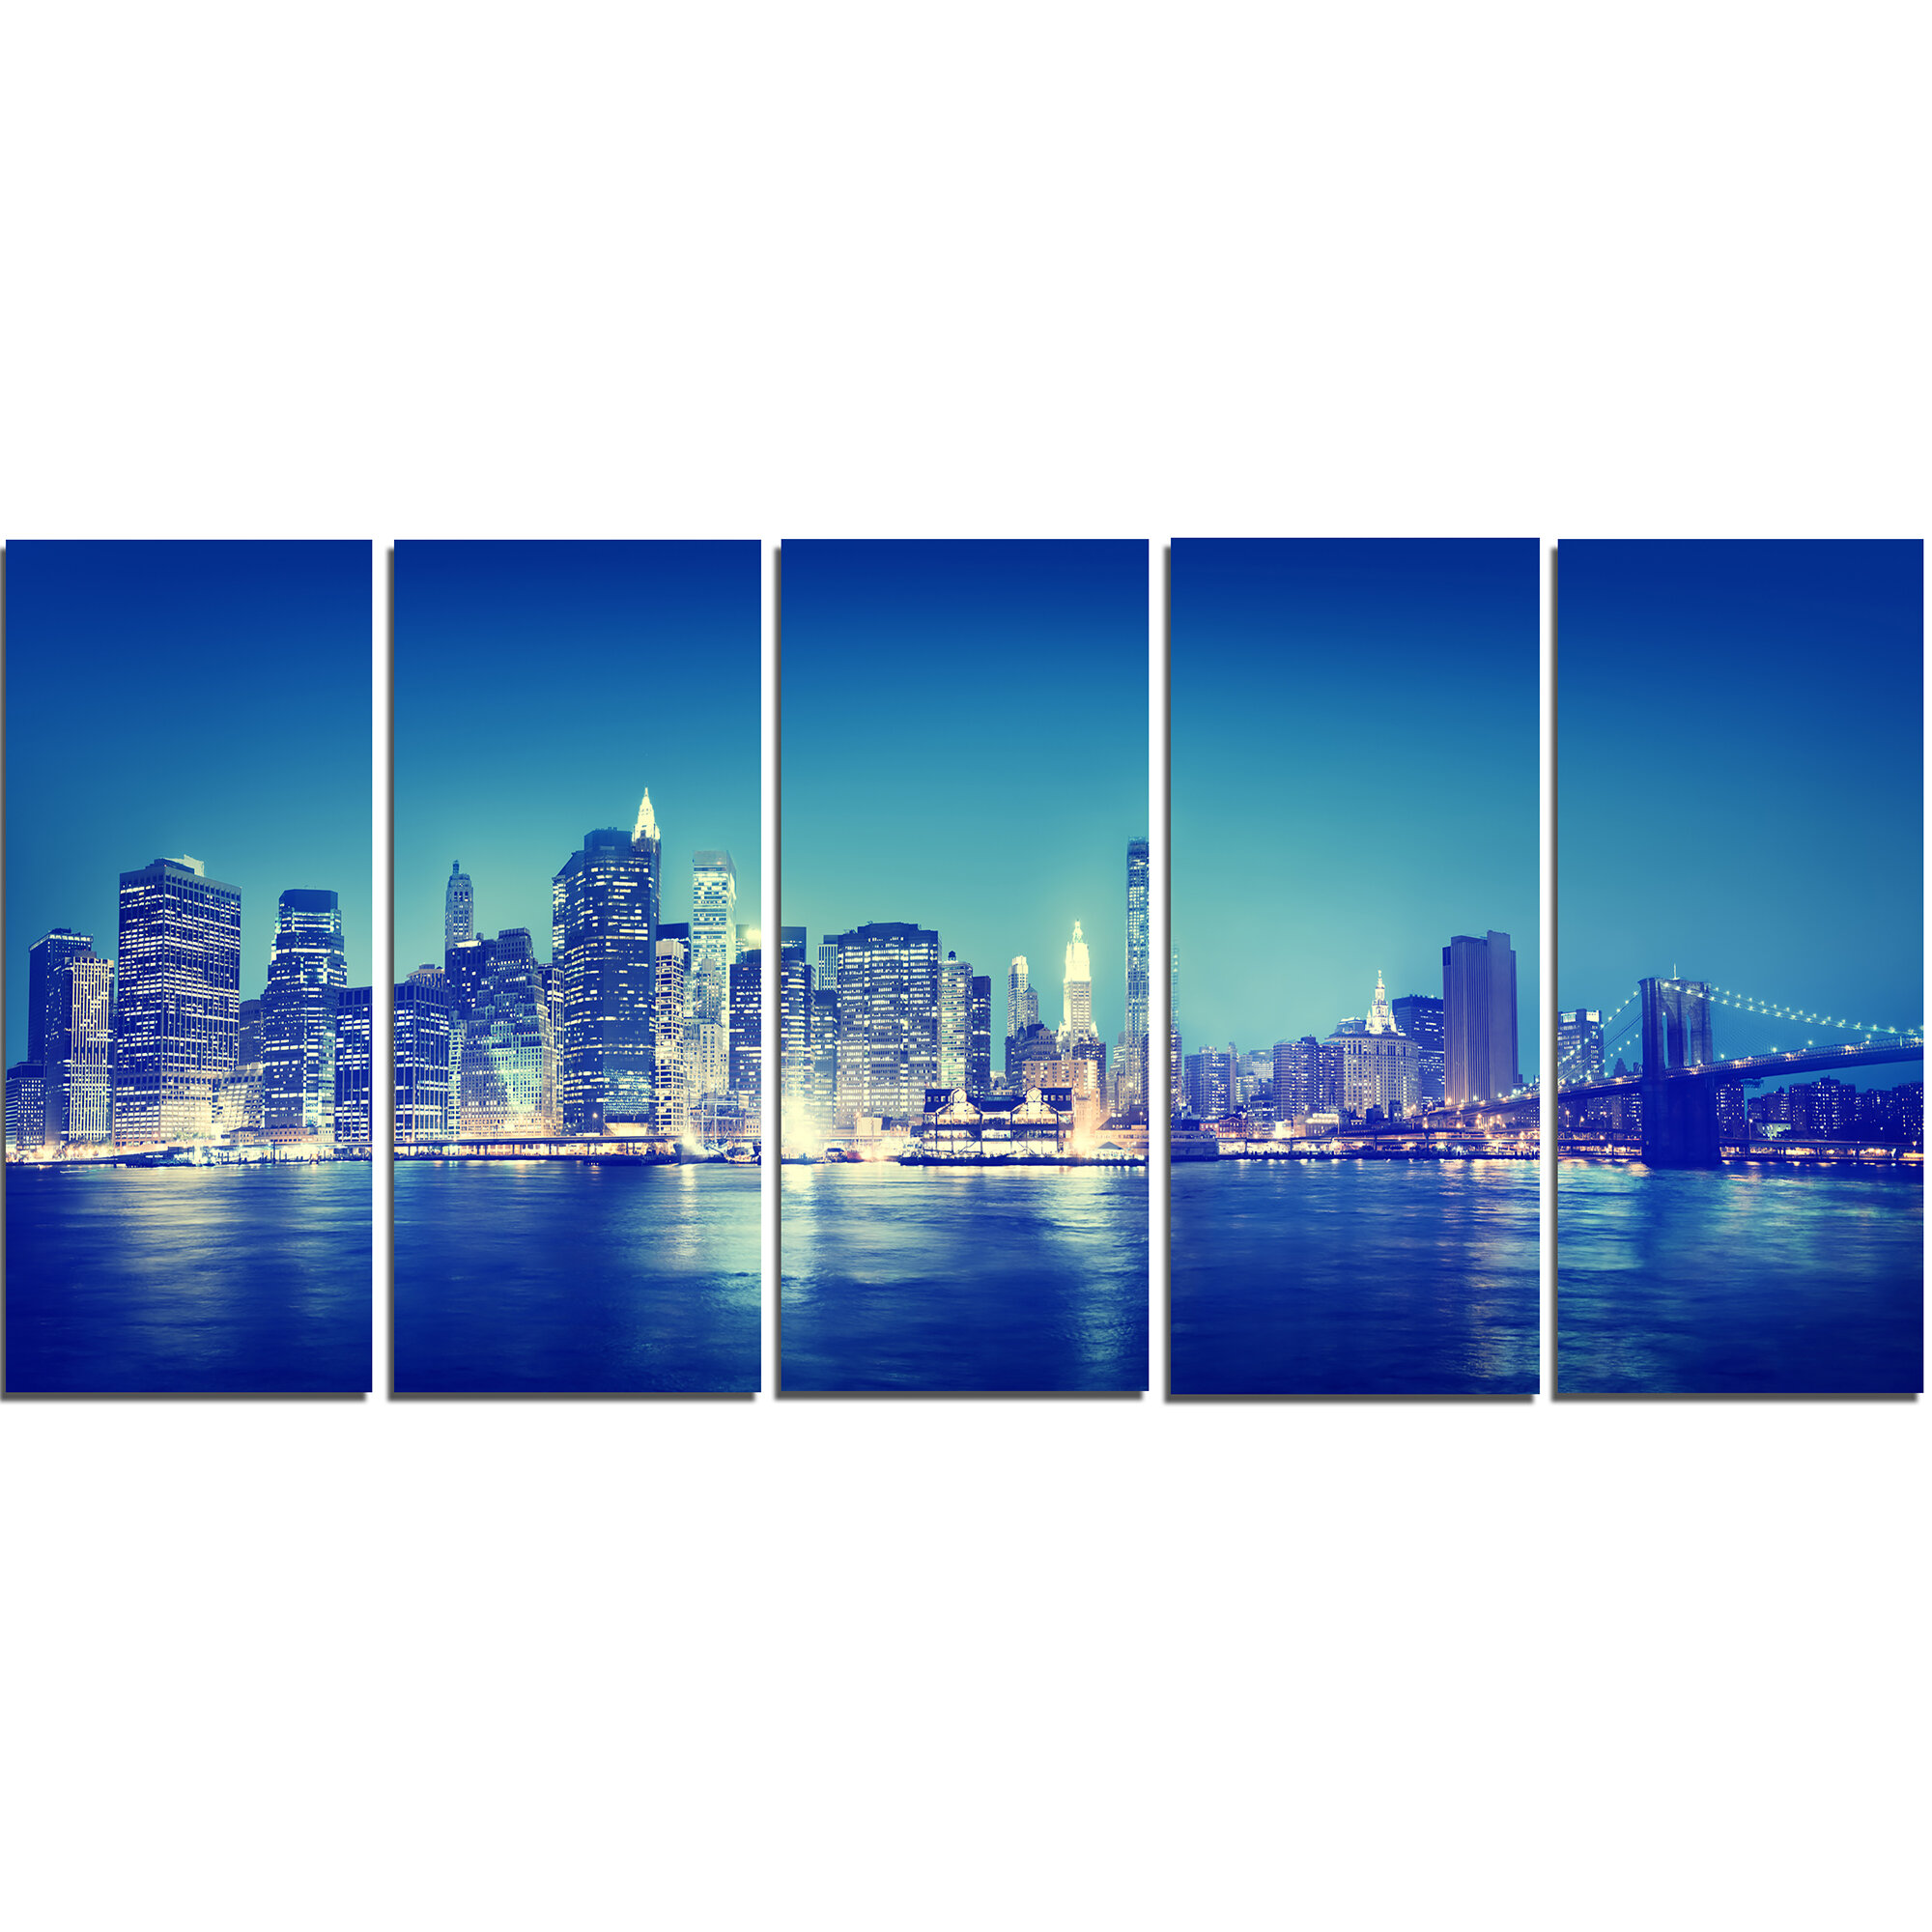 Designart Blue New York City At Night Panorama 5 Piece Wall Art On Wrapped Canvas Set Wayfair